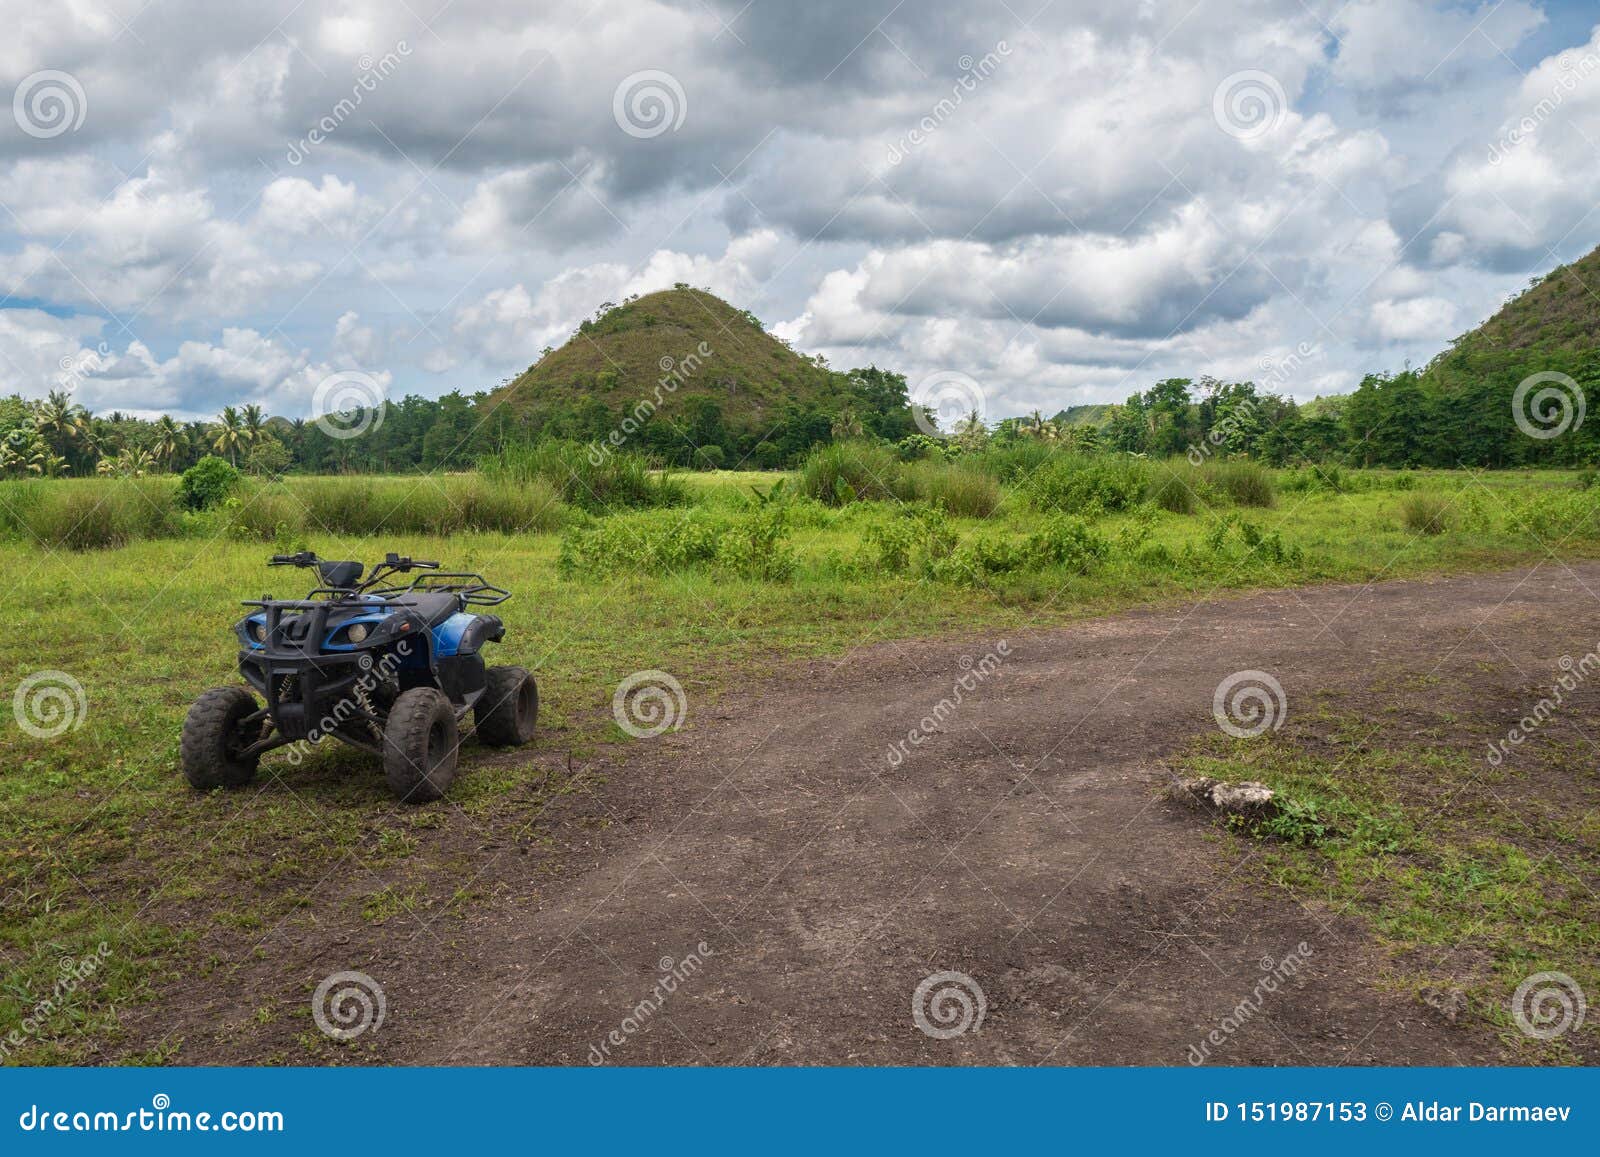 ATV Rental Ride Near Chocolate Hills Editorial Stock Photo - Image of hills, drive: 151987153